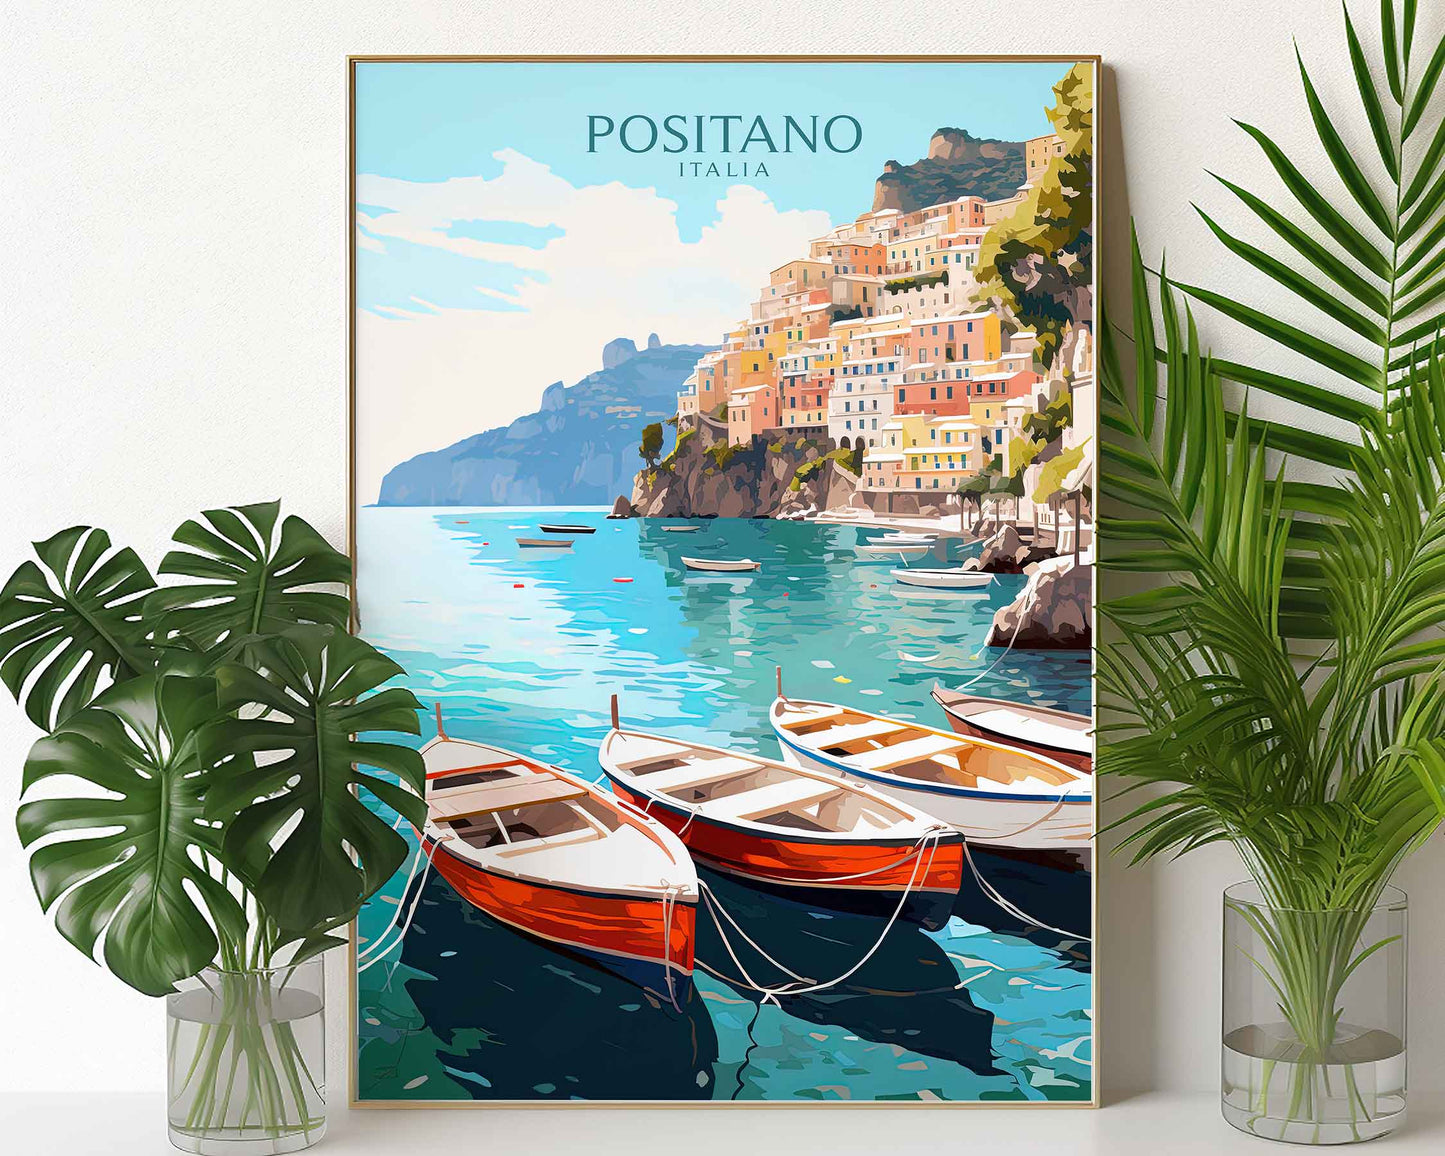 Framed Image of Positano Italy Illustration Travel Poster Prints Wall Art